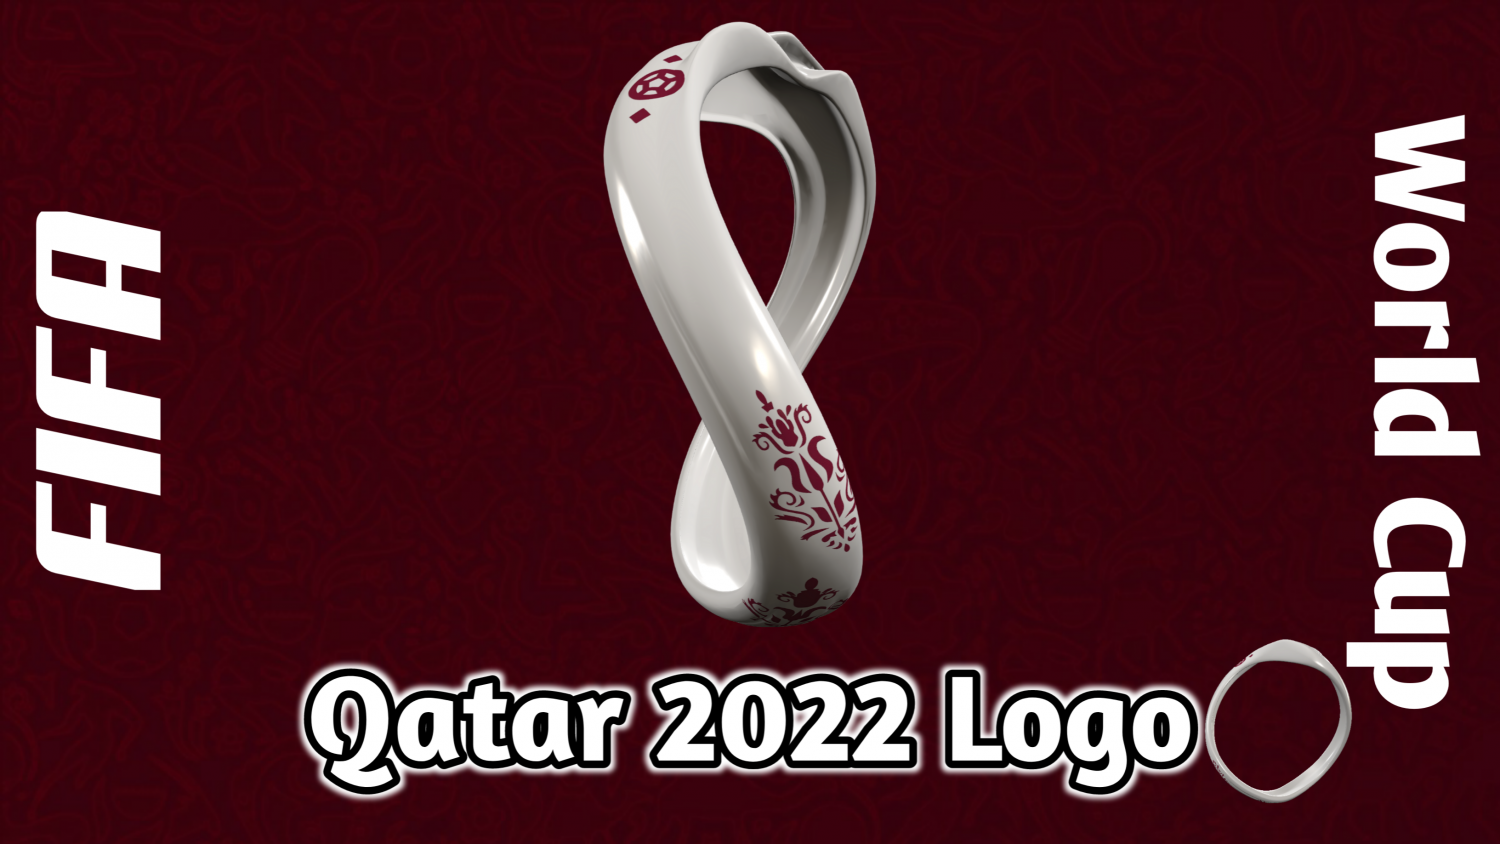 Qatar 2022 Fifa World Cup Logo HD PNG